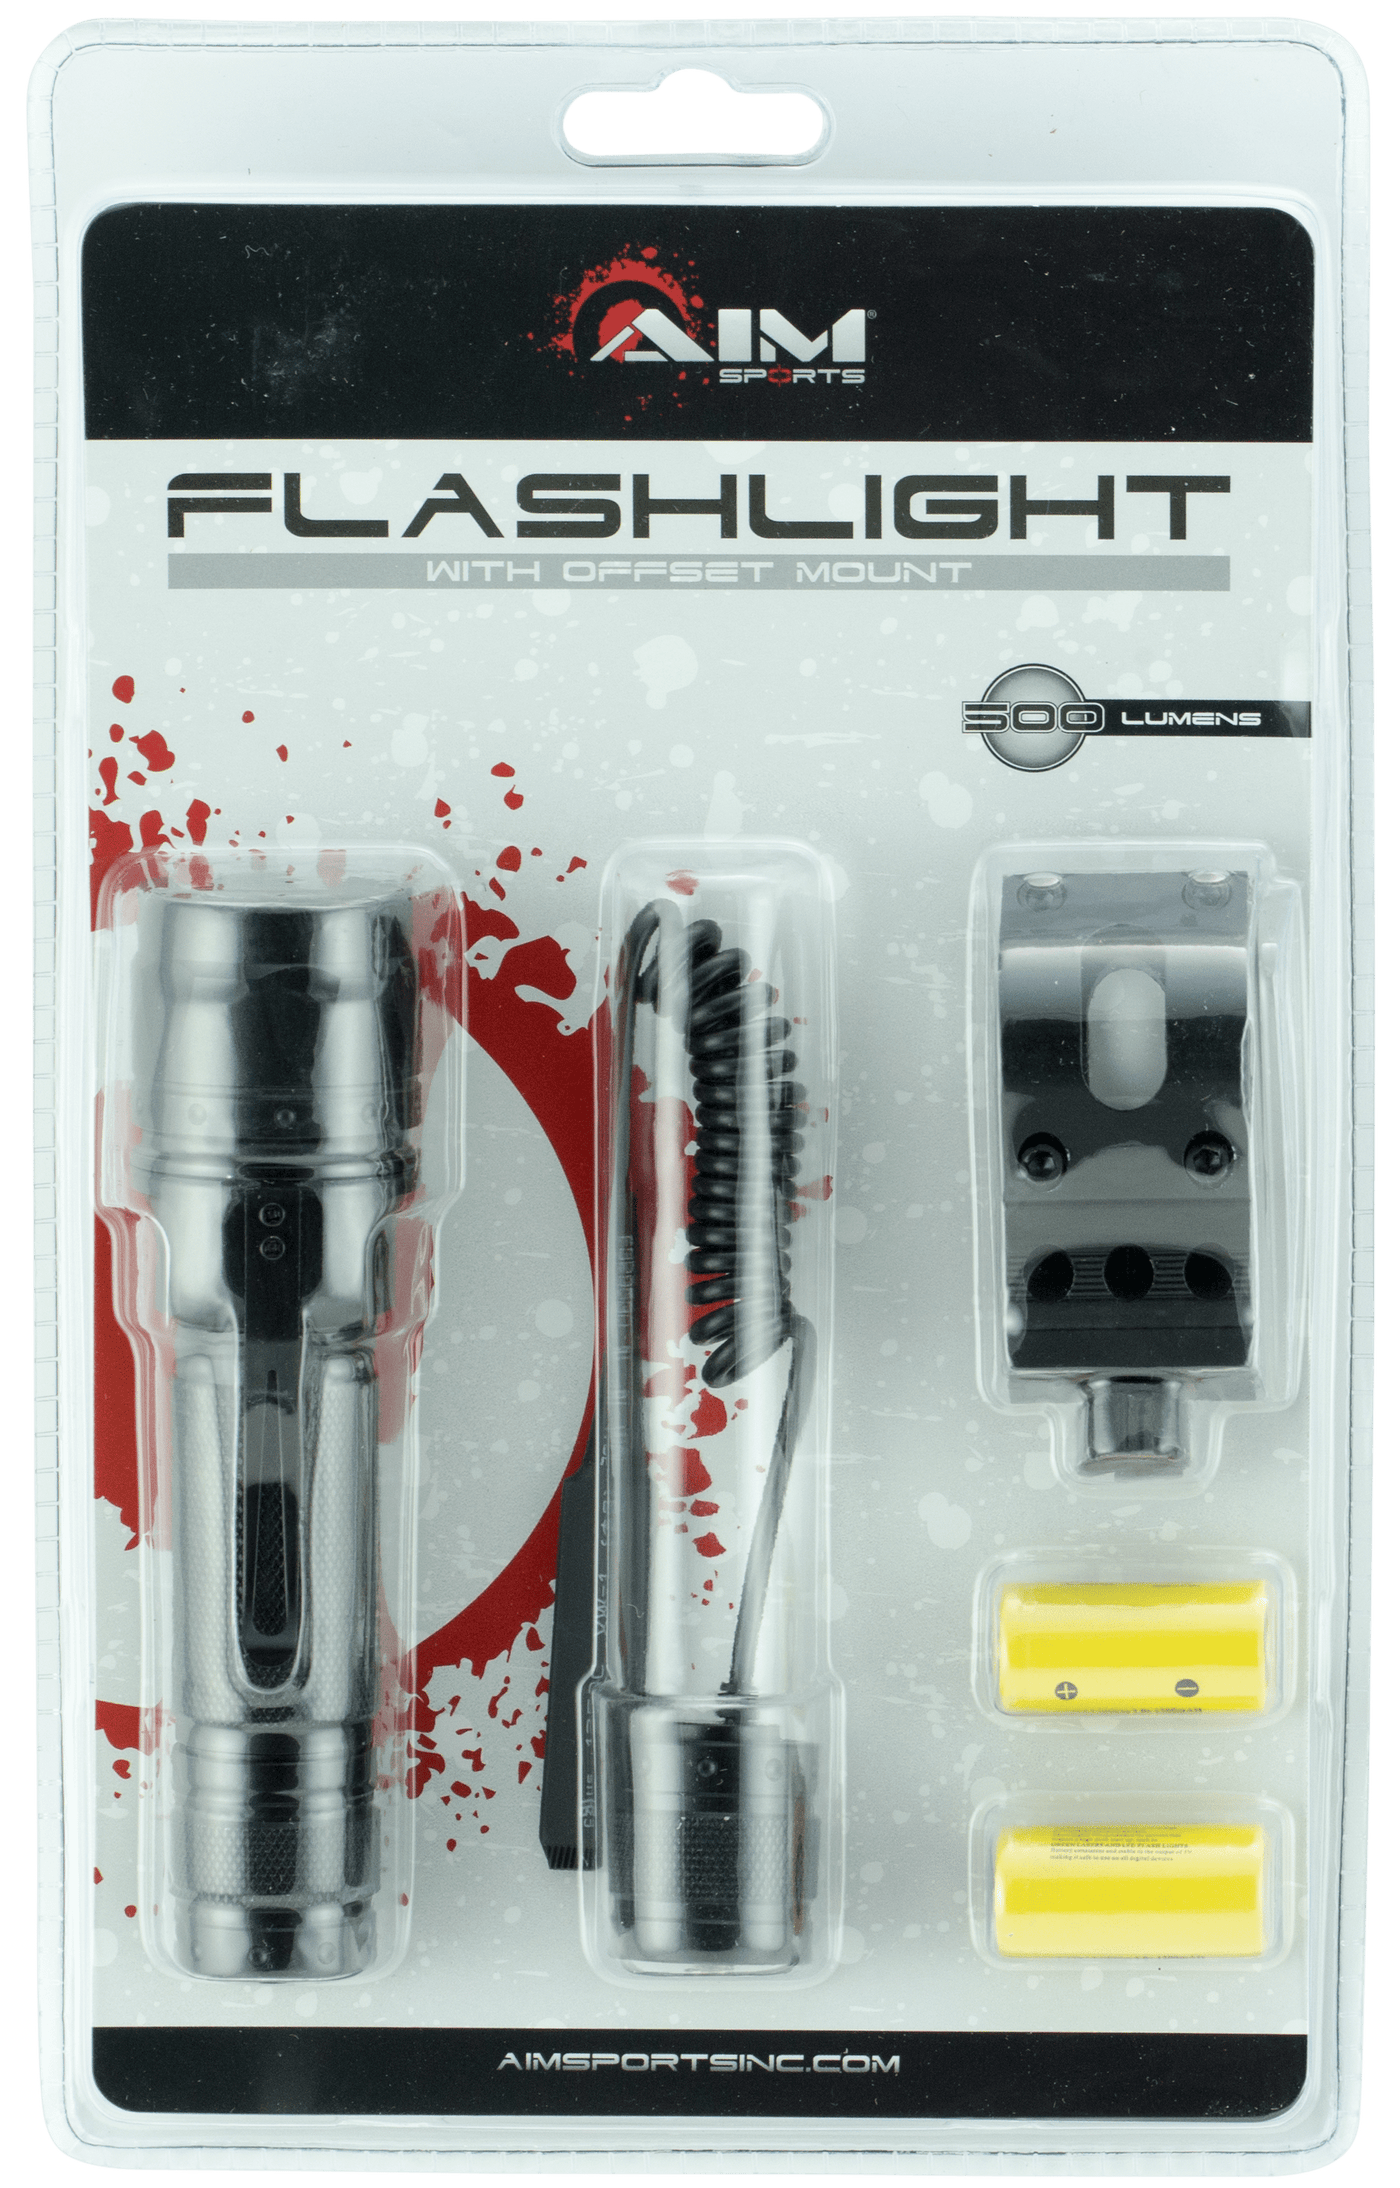 Aim Sports Aim Sports Flashlight, Aimsports Fhd500b   Flashlight 500lum Accessories